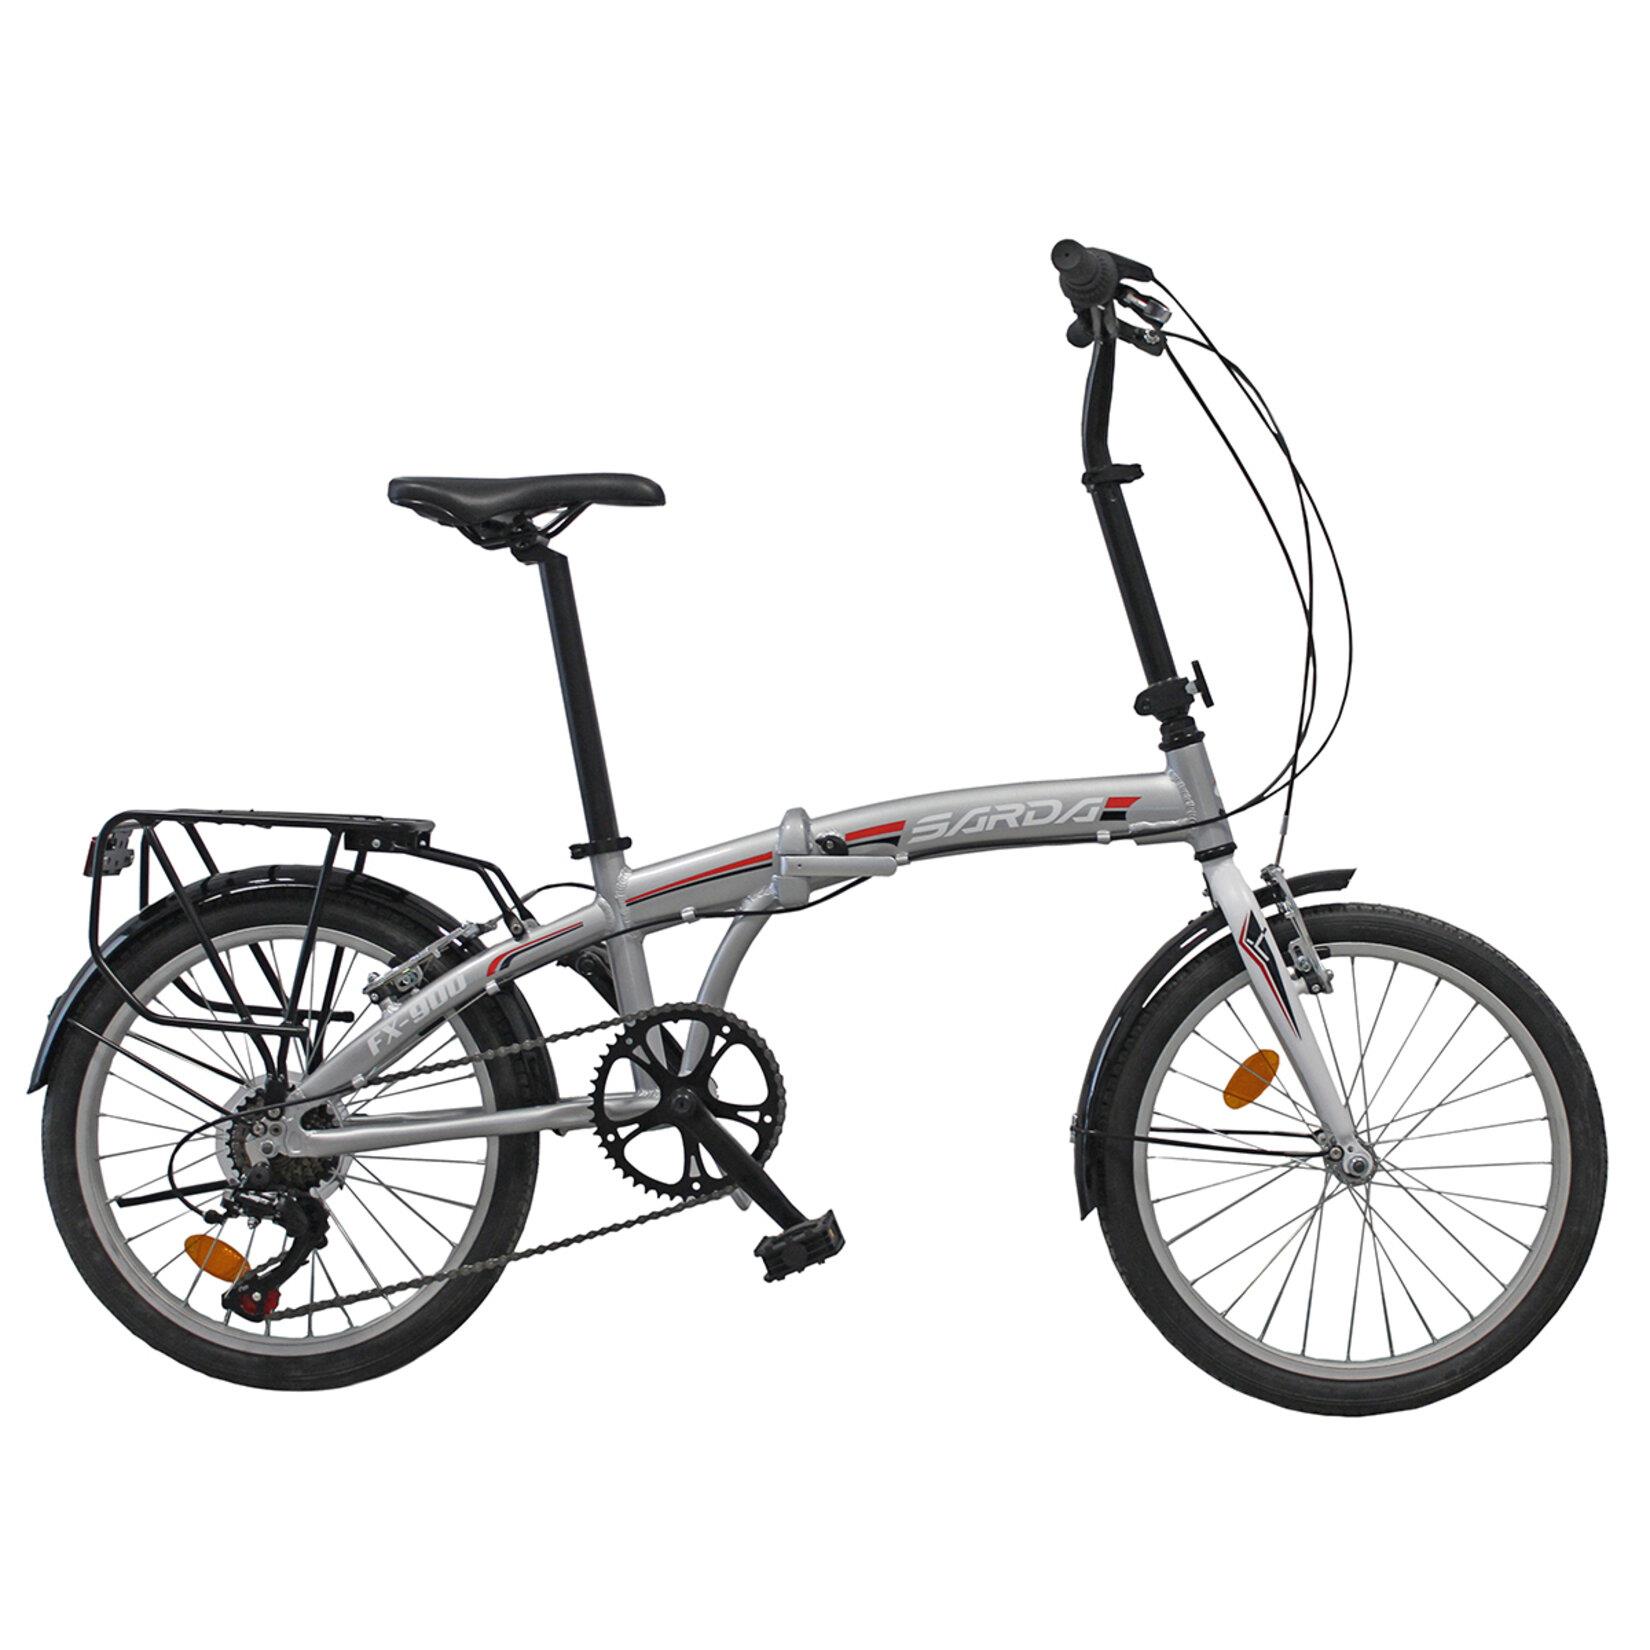 SARDA FX-900 KATLANIR BİSİKLET 7 VİTES SHIMANO – Sarızeybekler Bisiklet